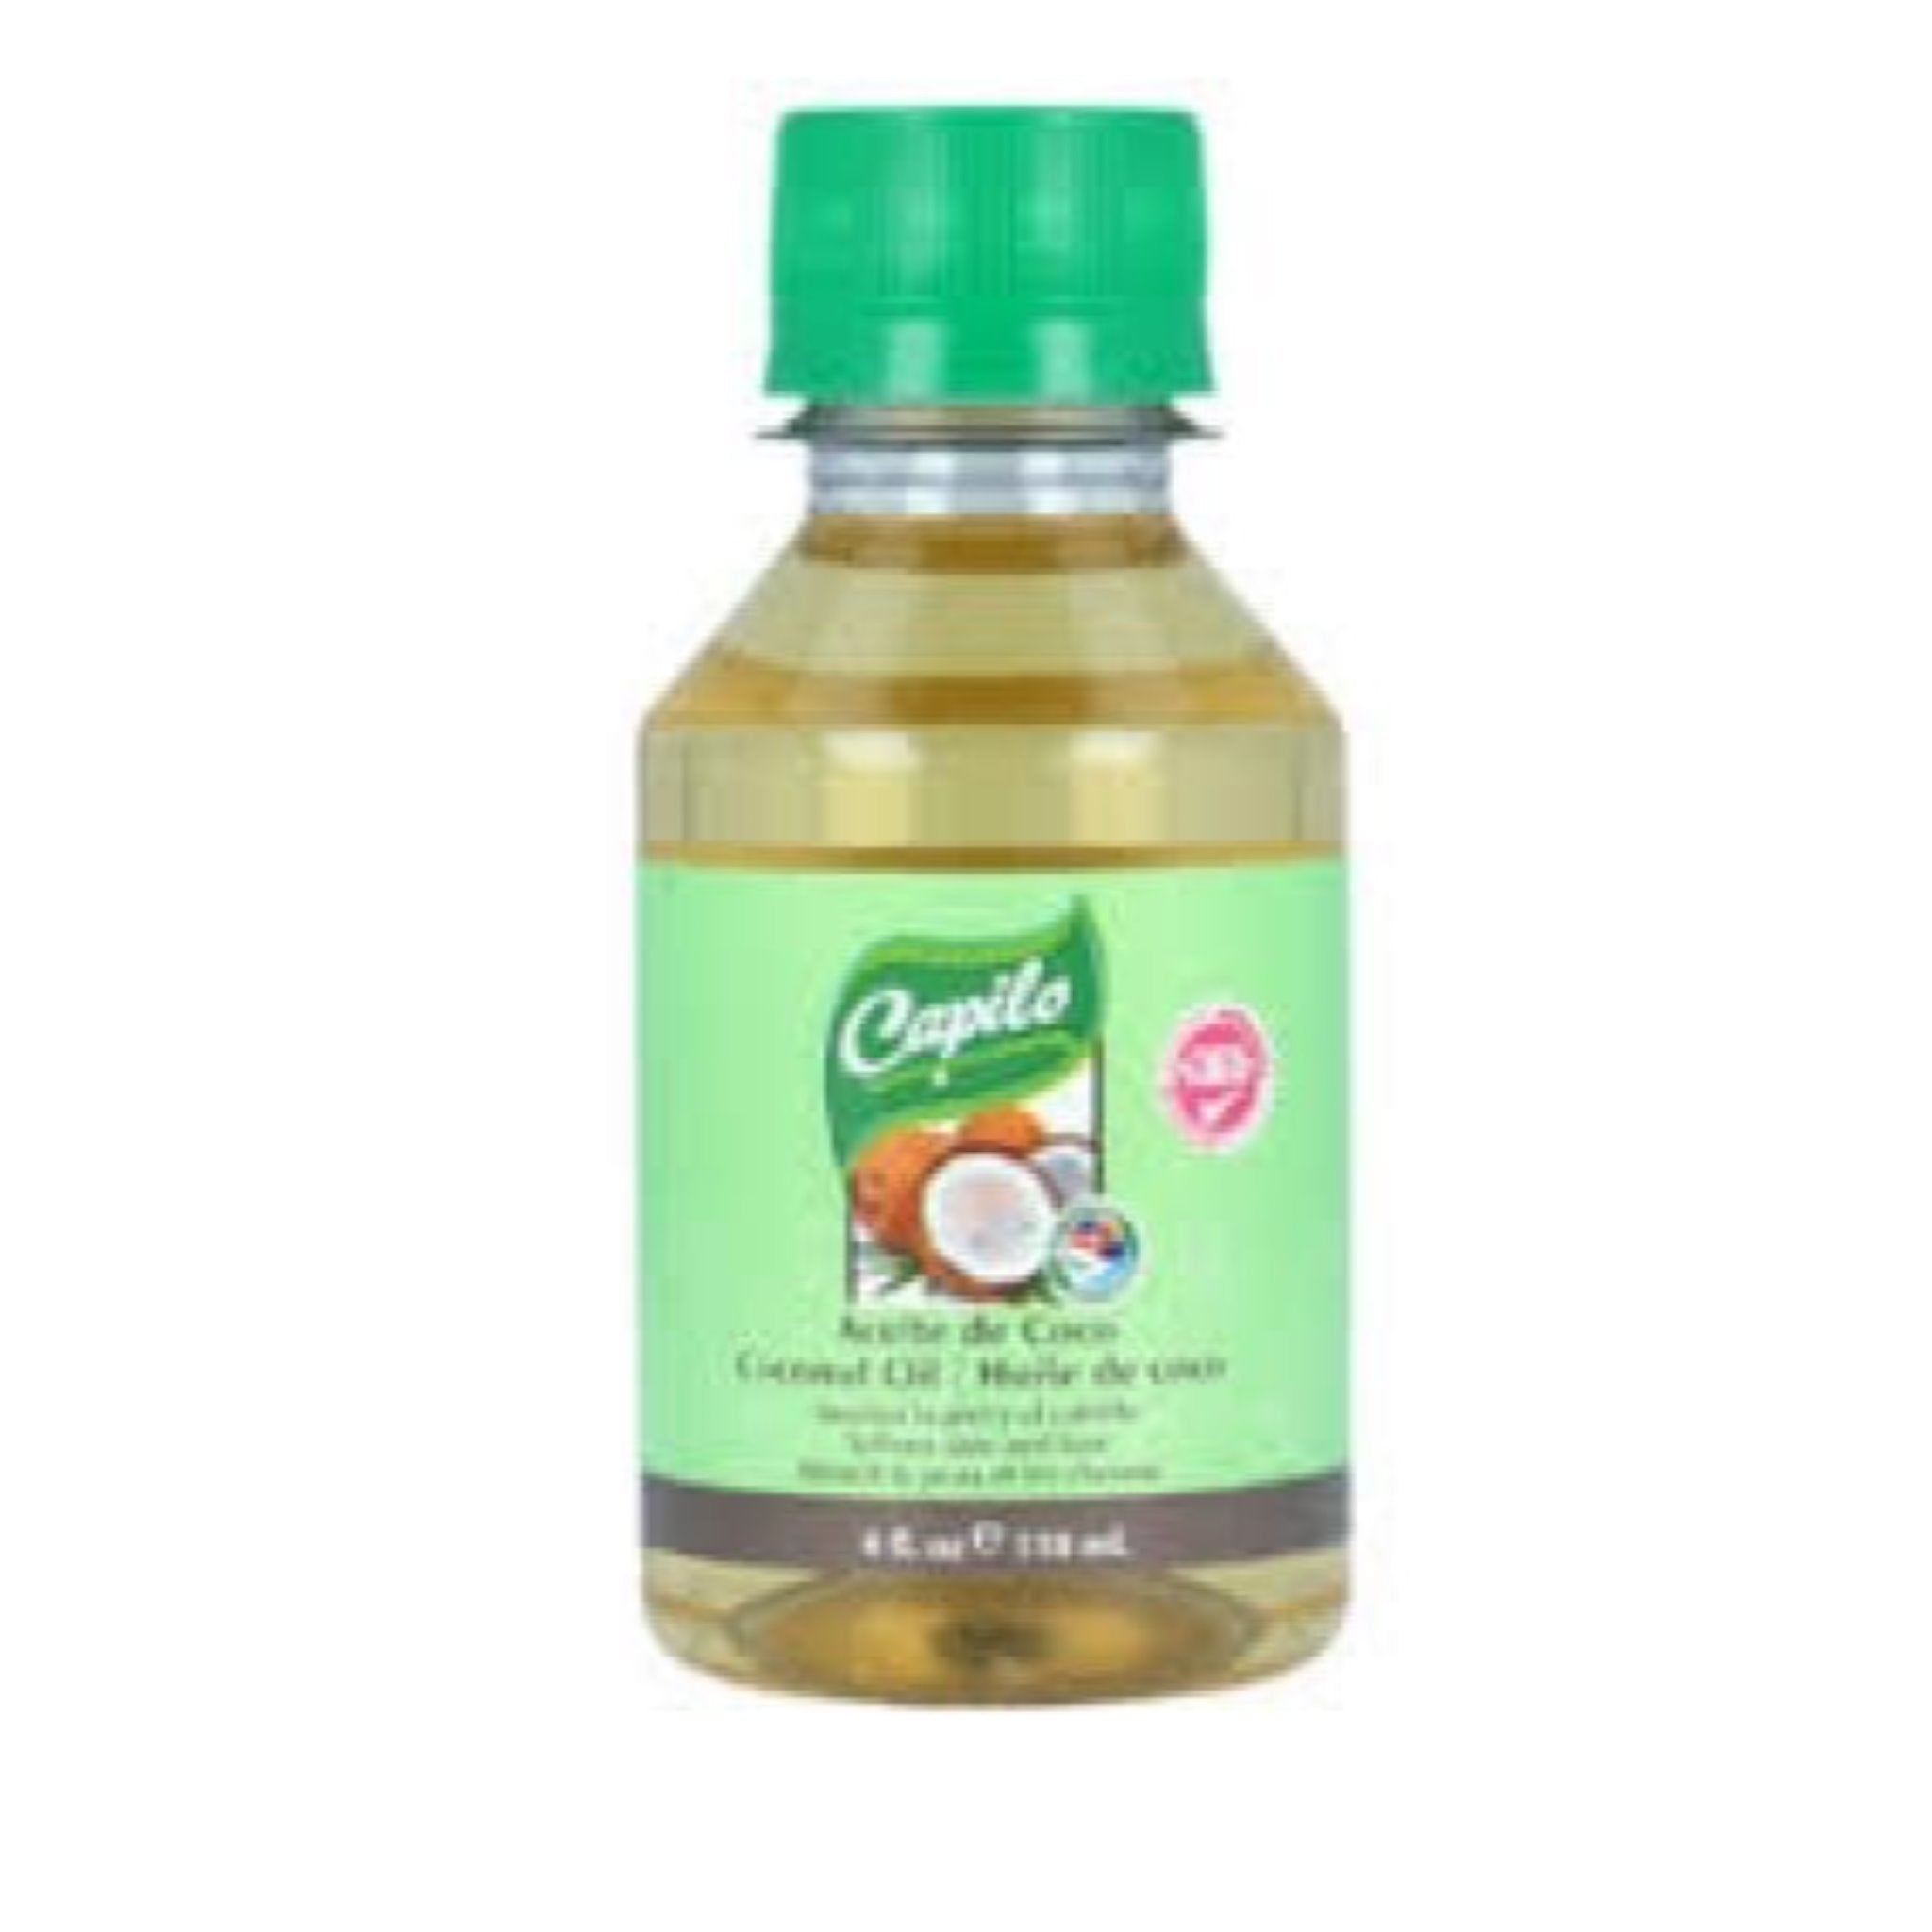 Capilo Coconut Oil 4 oz